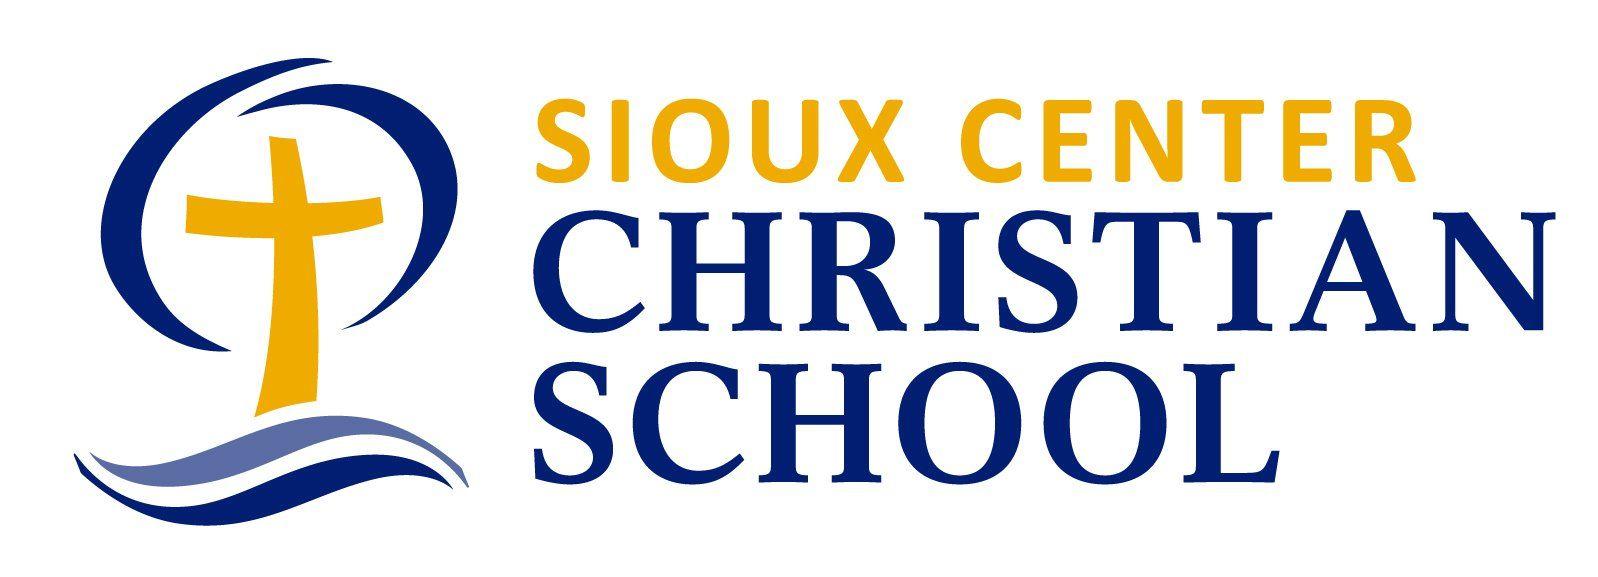 Christian Logo - Our Logos - Sioux Center Christian School